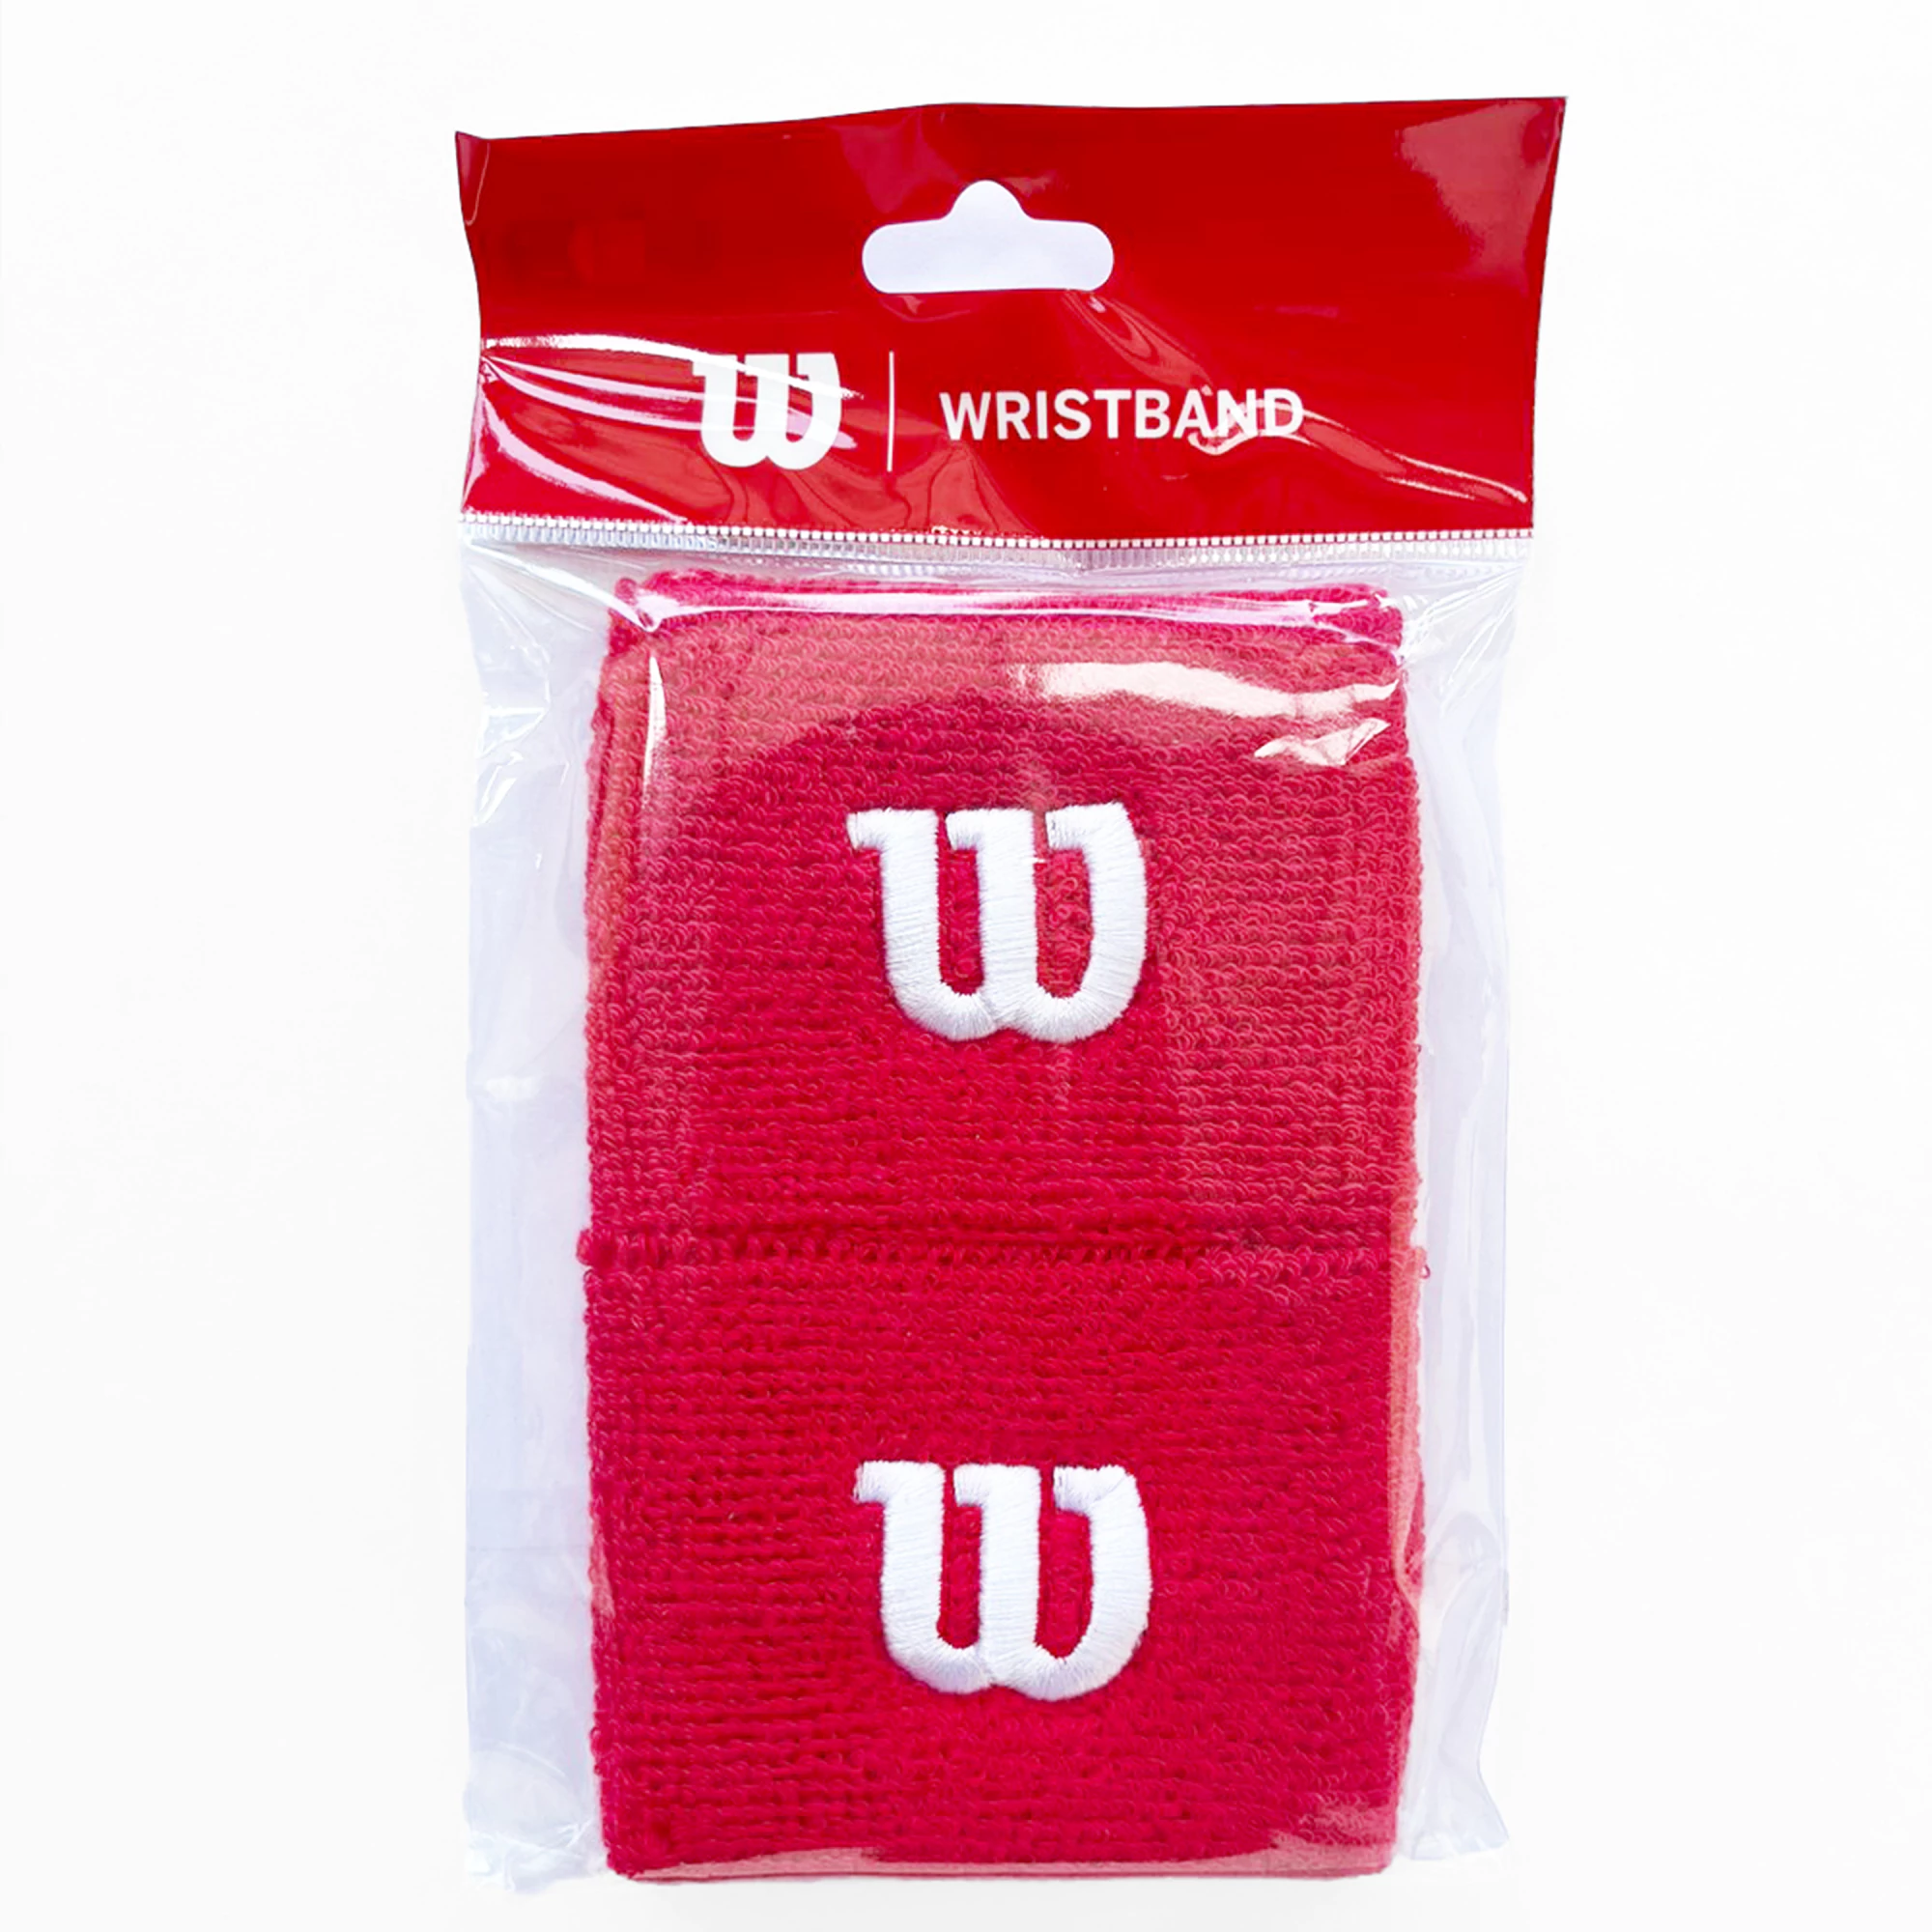 WILSON Wristband Red